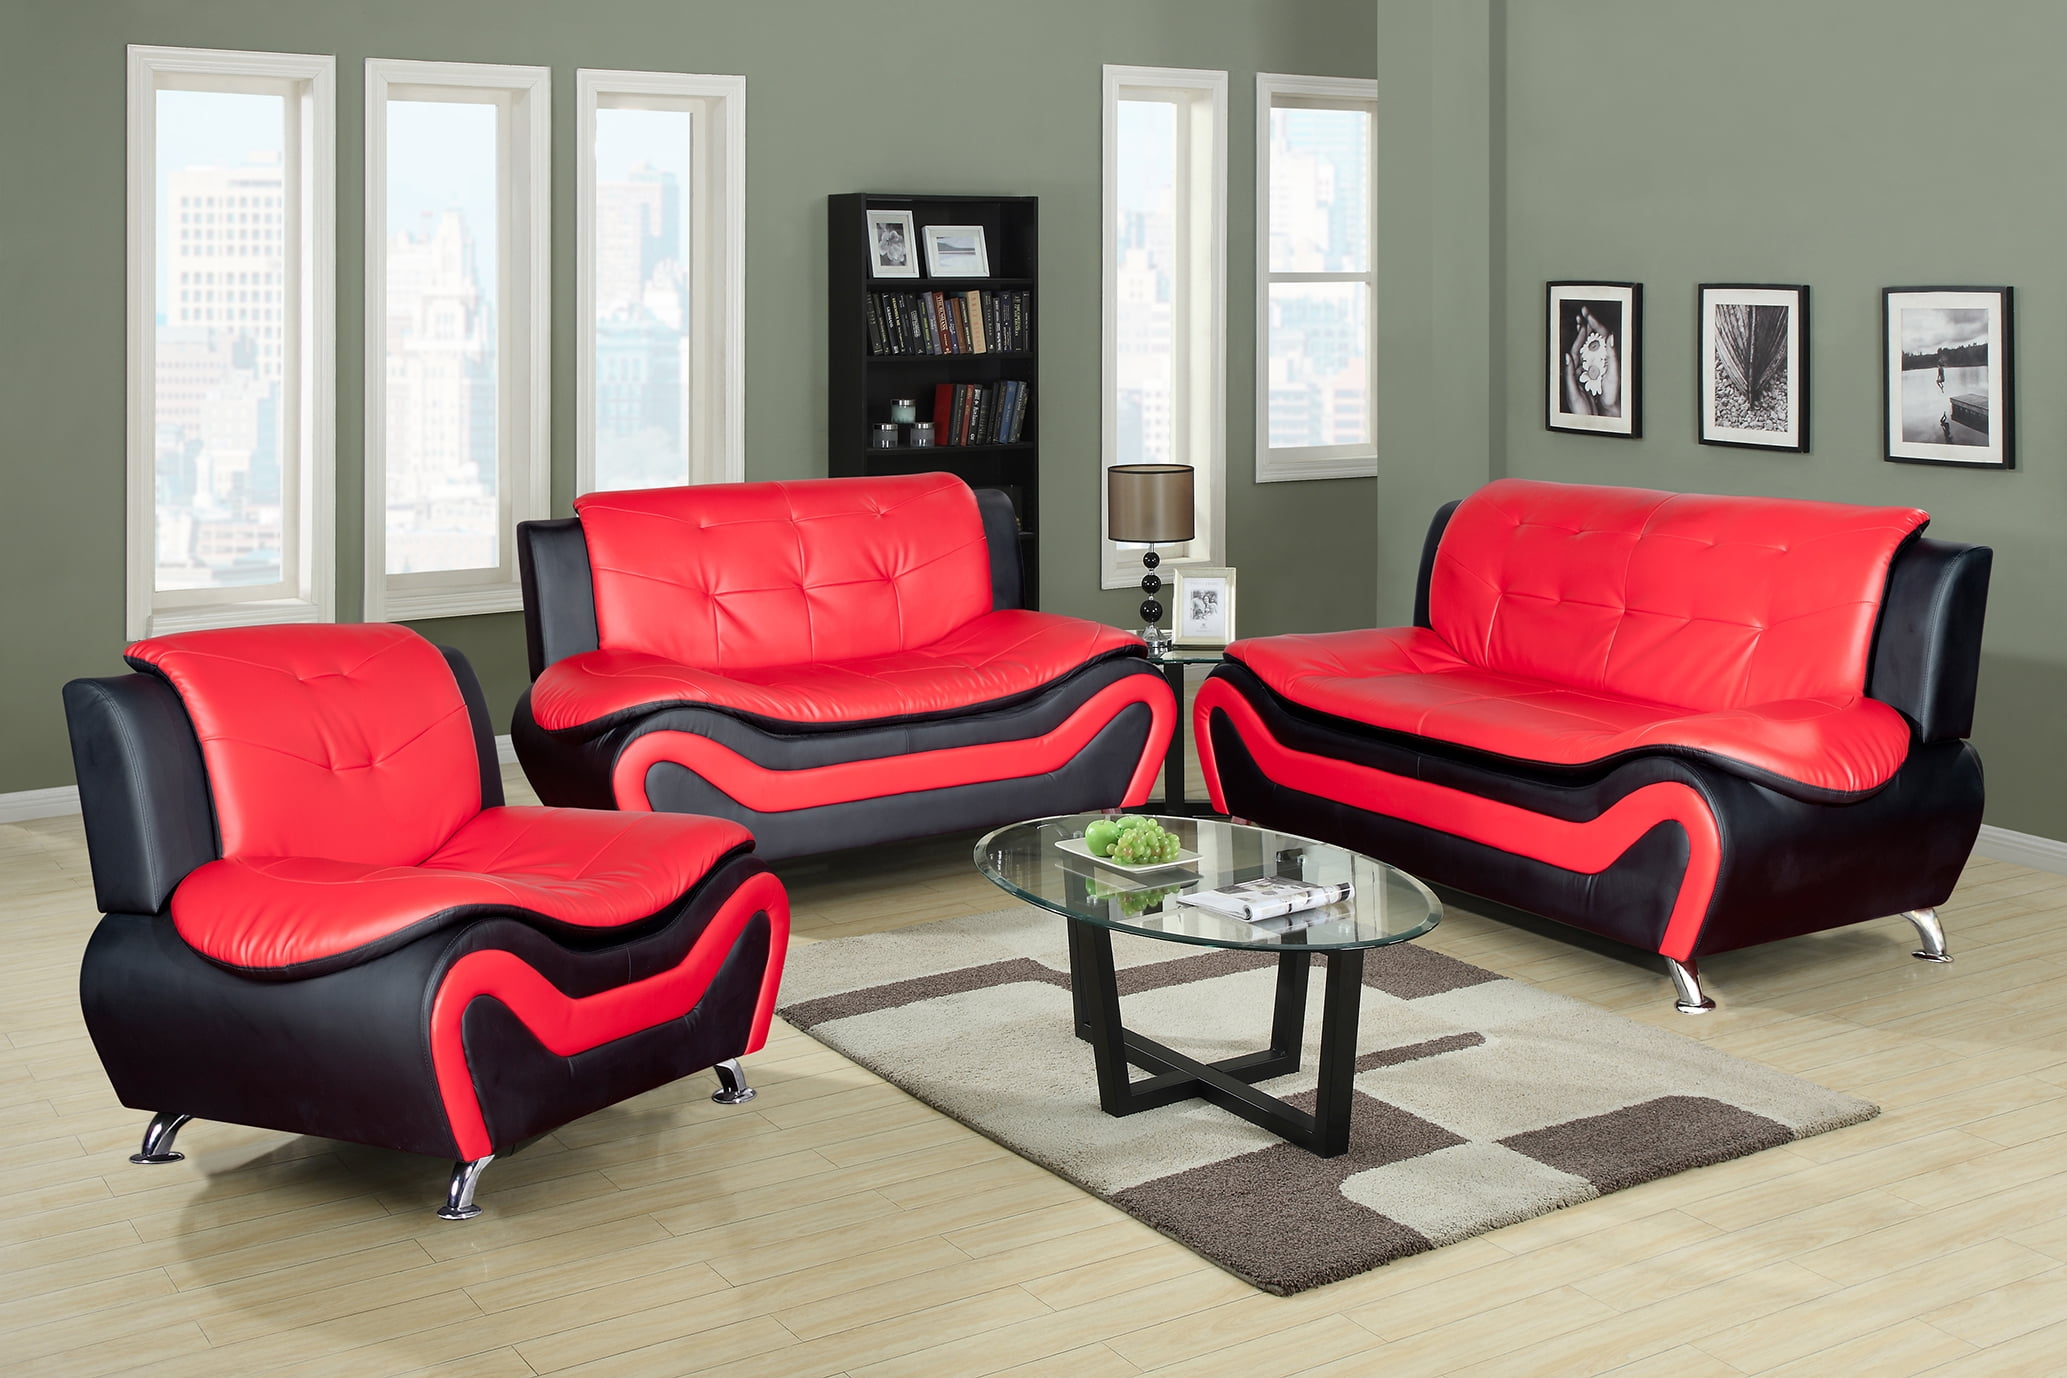 Lifestyle Furniture Lf4503 Veneto Sofa, Red Black Living Room Furniture